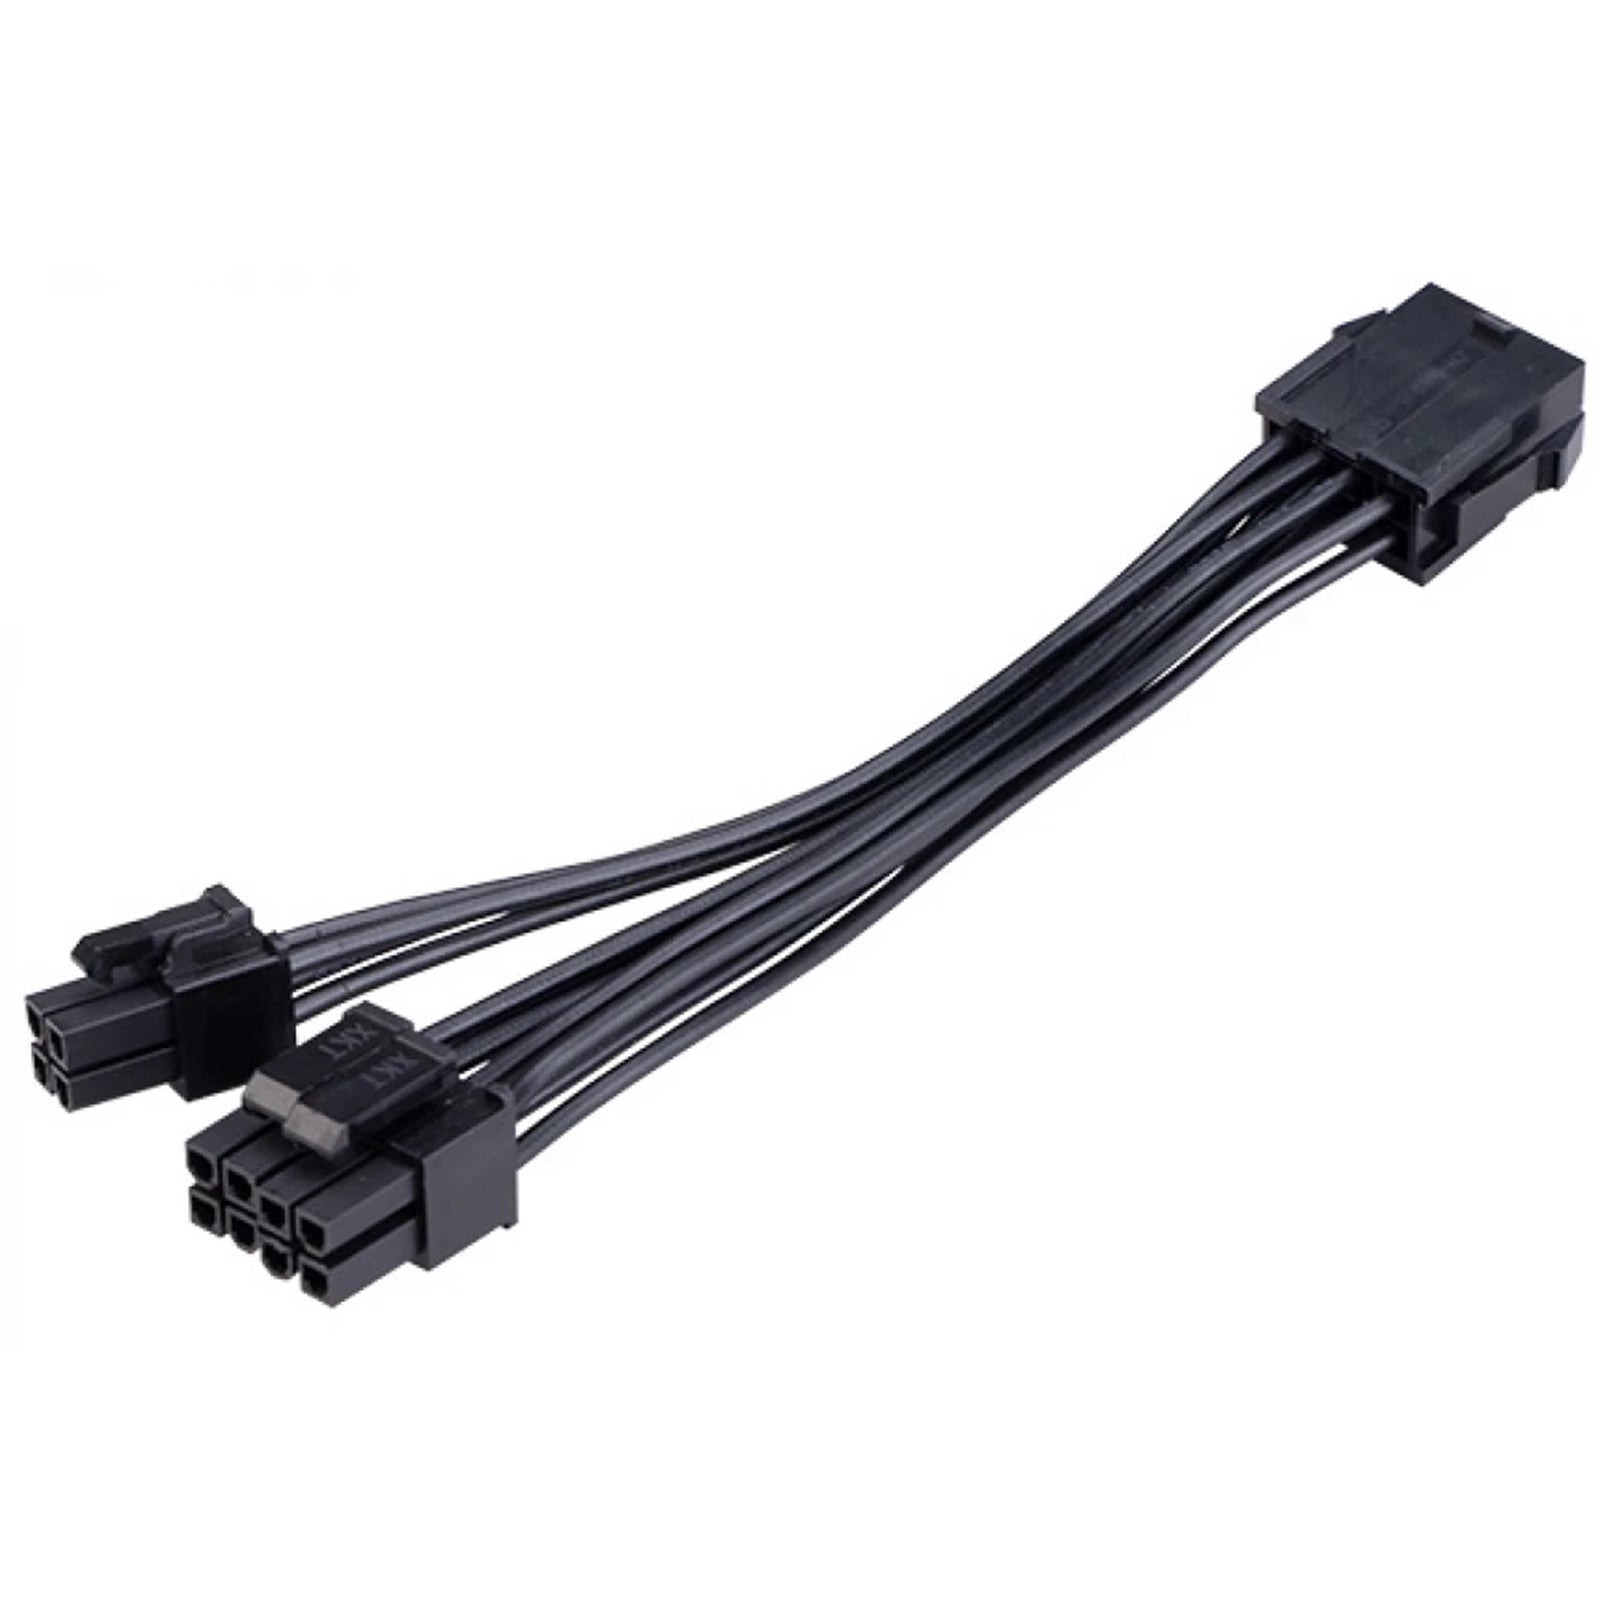 Photos - Cable (video, audio, USB) Akasa AK-CBPW22-15 Internal Power Adapter Cable, 8-Pin ATX PSU to 8+ 